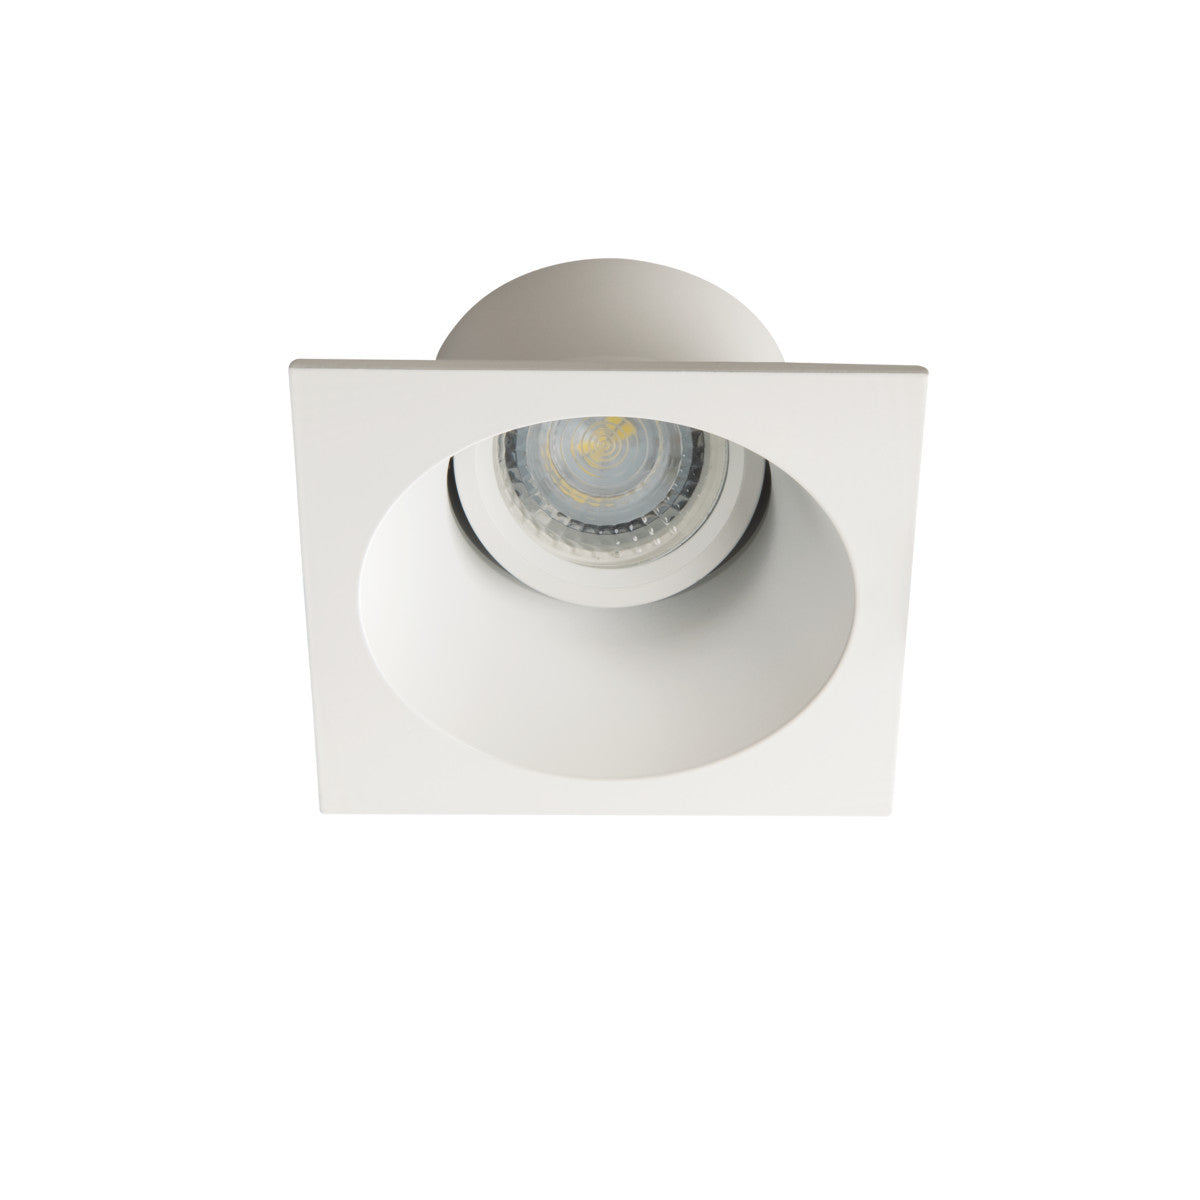 Kanlux APRILA Round Square Ceiling Recessed Decorative GU10 Spot Light Fitting Adjustable